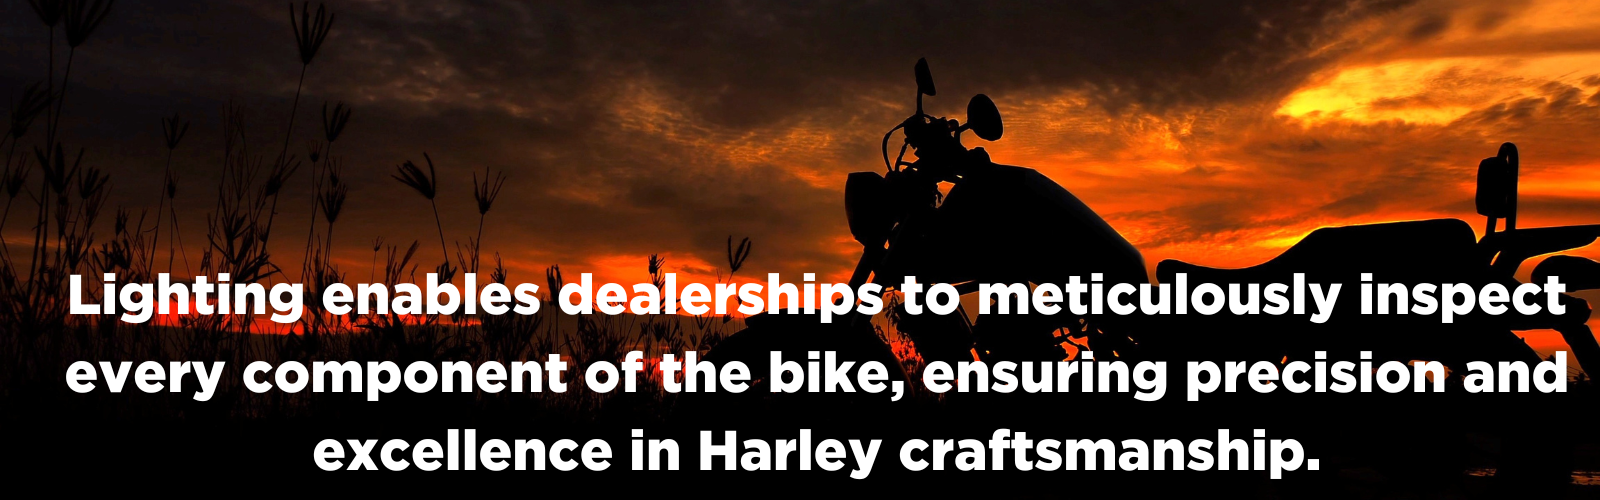 lighting for motorcycle dealerships